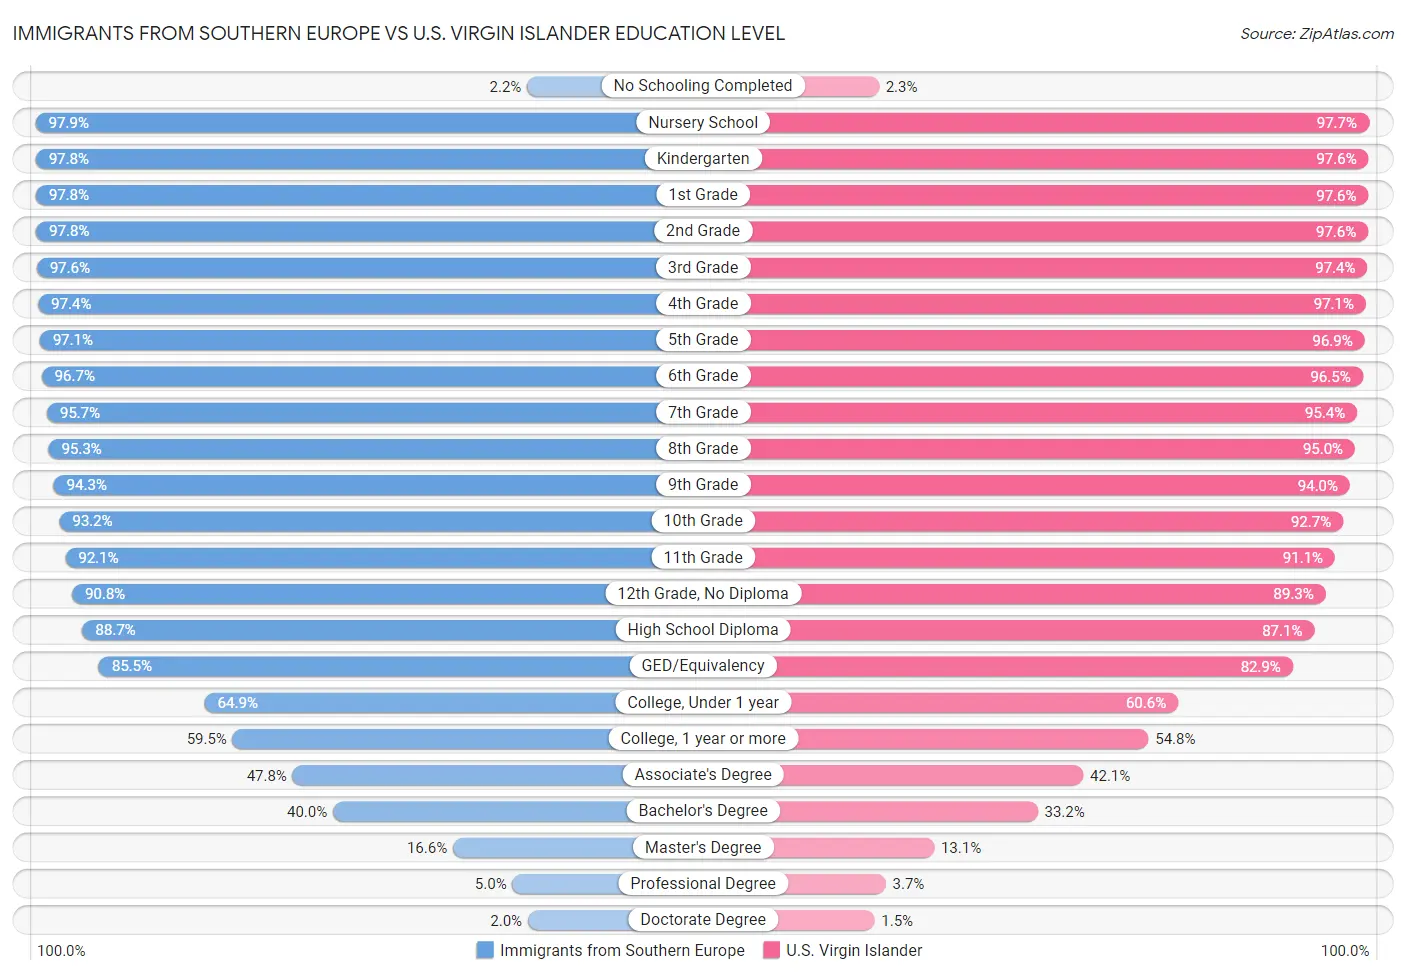 Immigrants from Southern Europe vs U.S. Virgin Islander Education Level